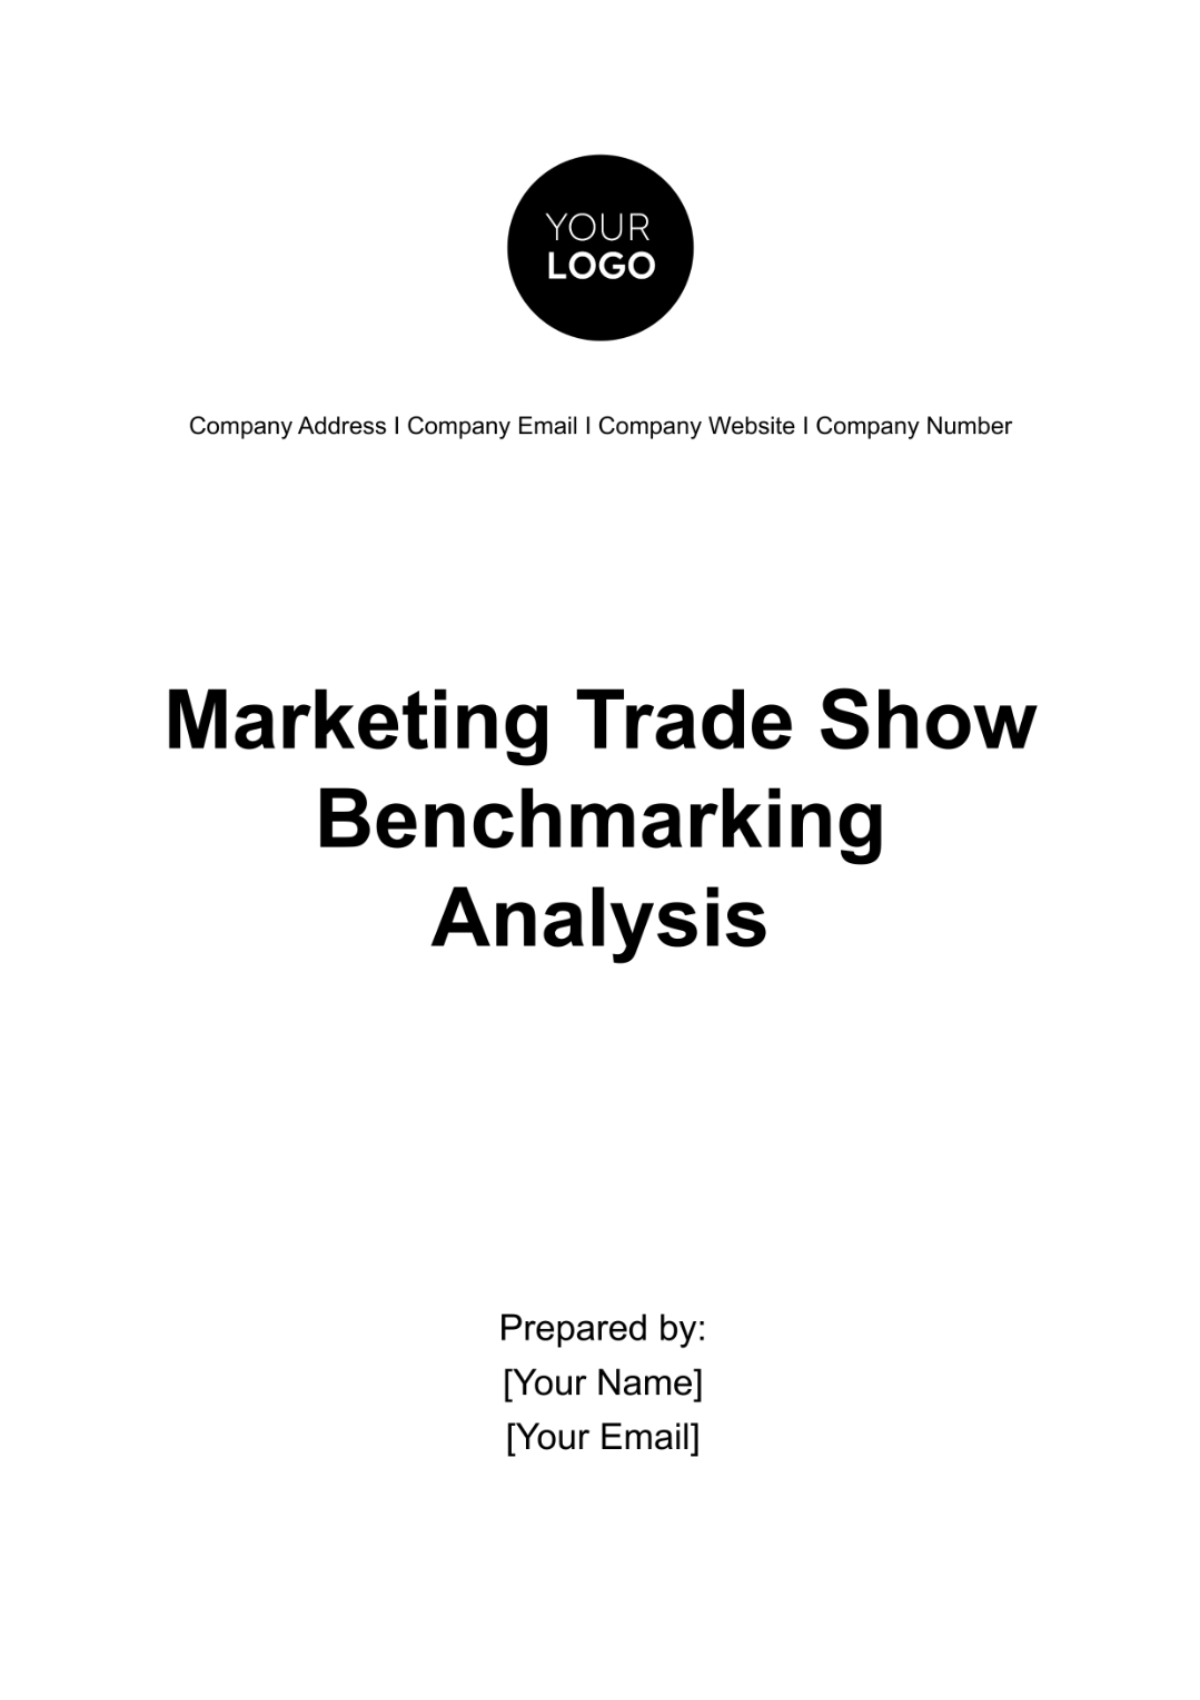 Free Marketing Trade Show Benchmarking Analysis Template